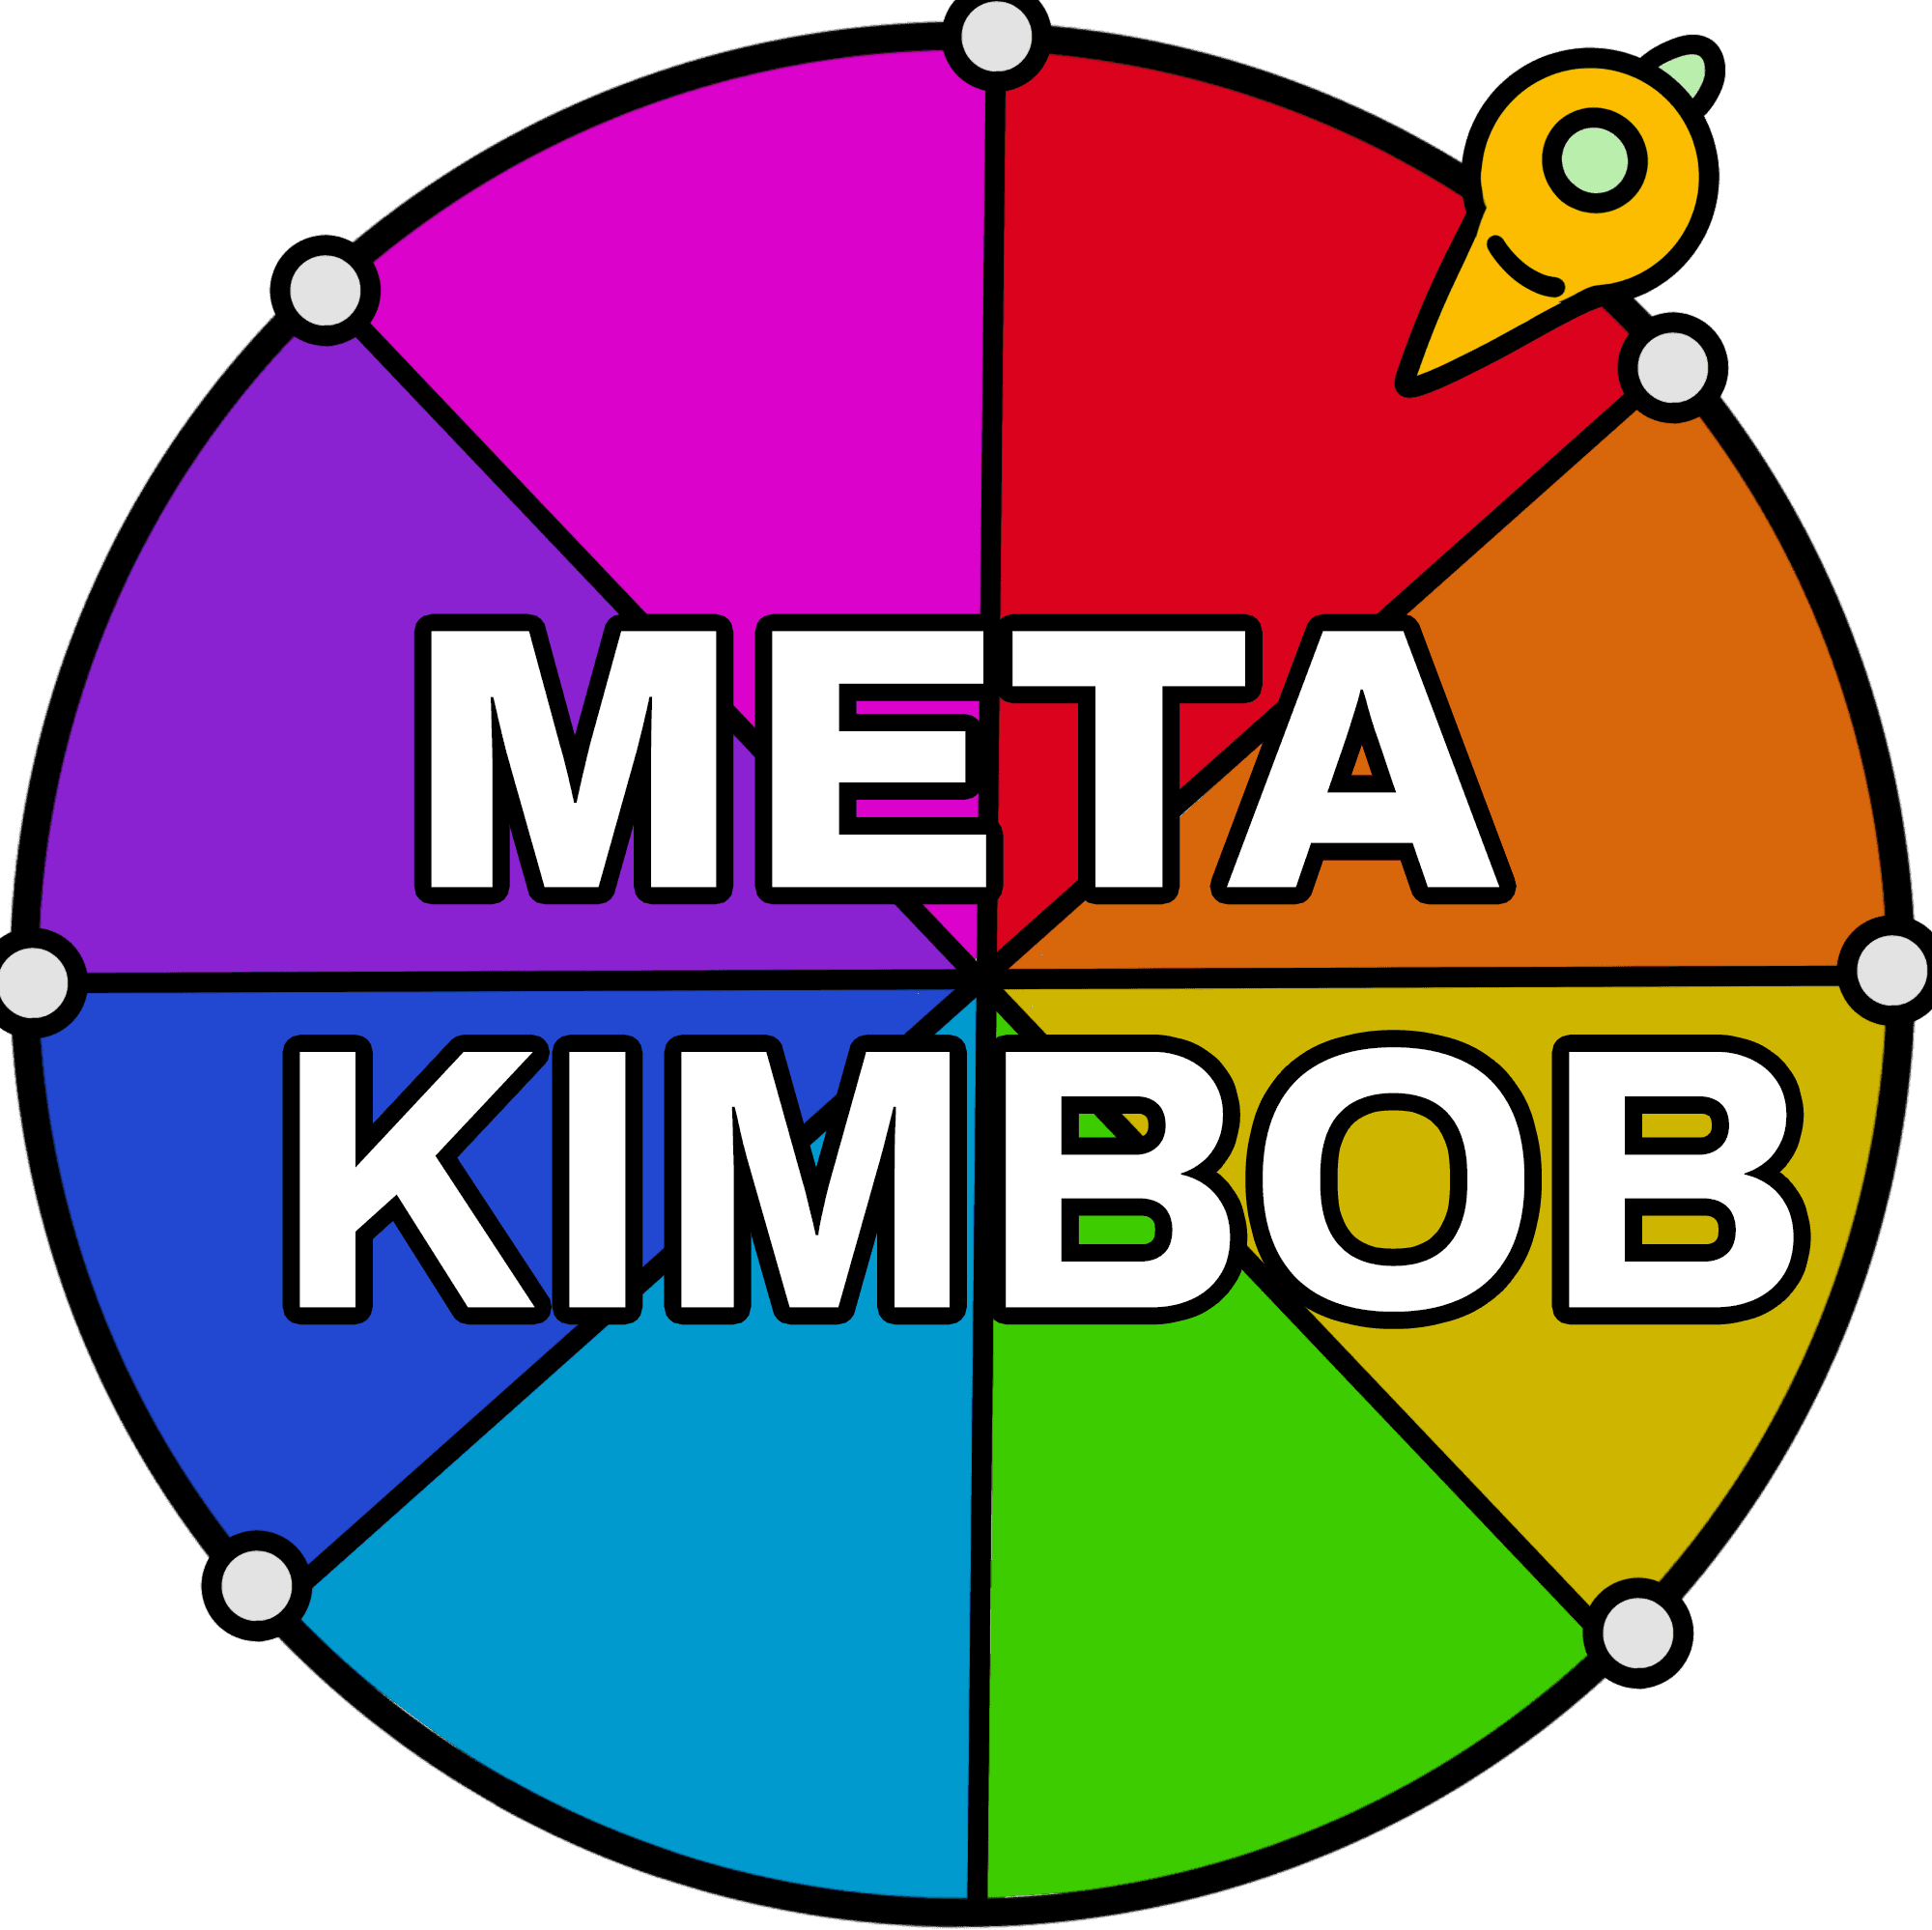 The Metakimbob